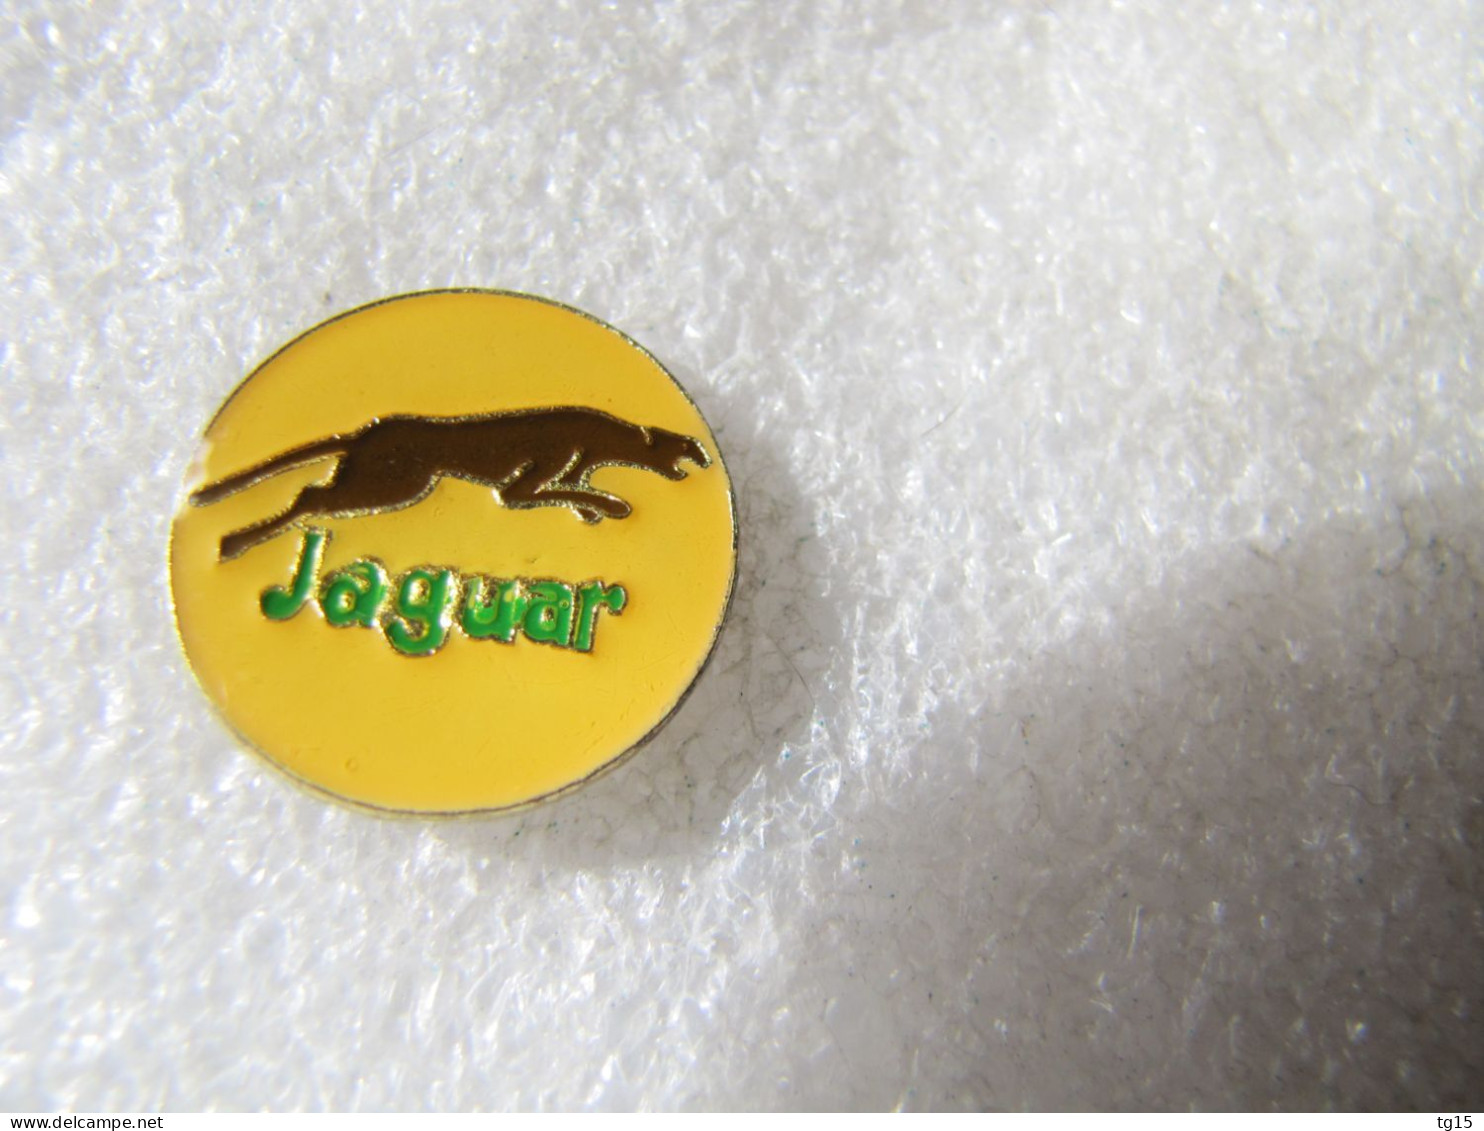 PIN'S   LOGO  JAGUAR - Jaguar